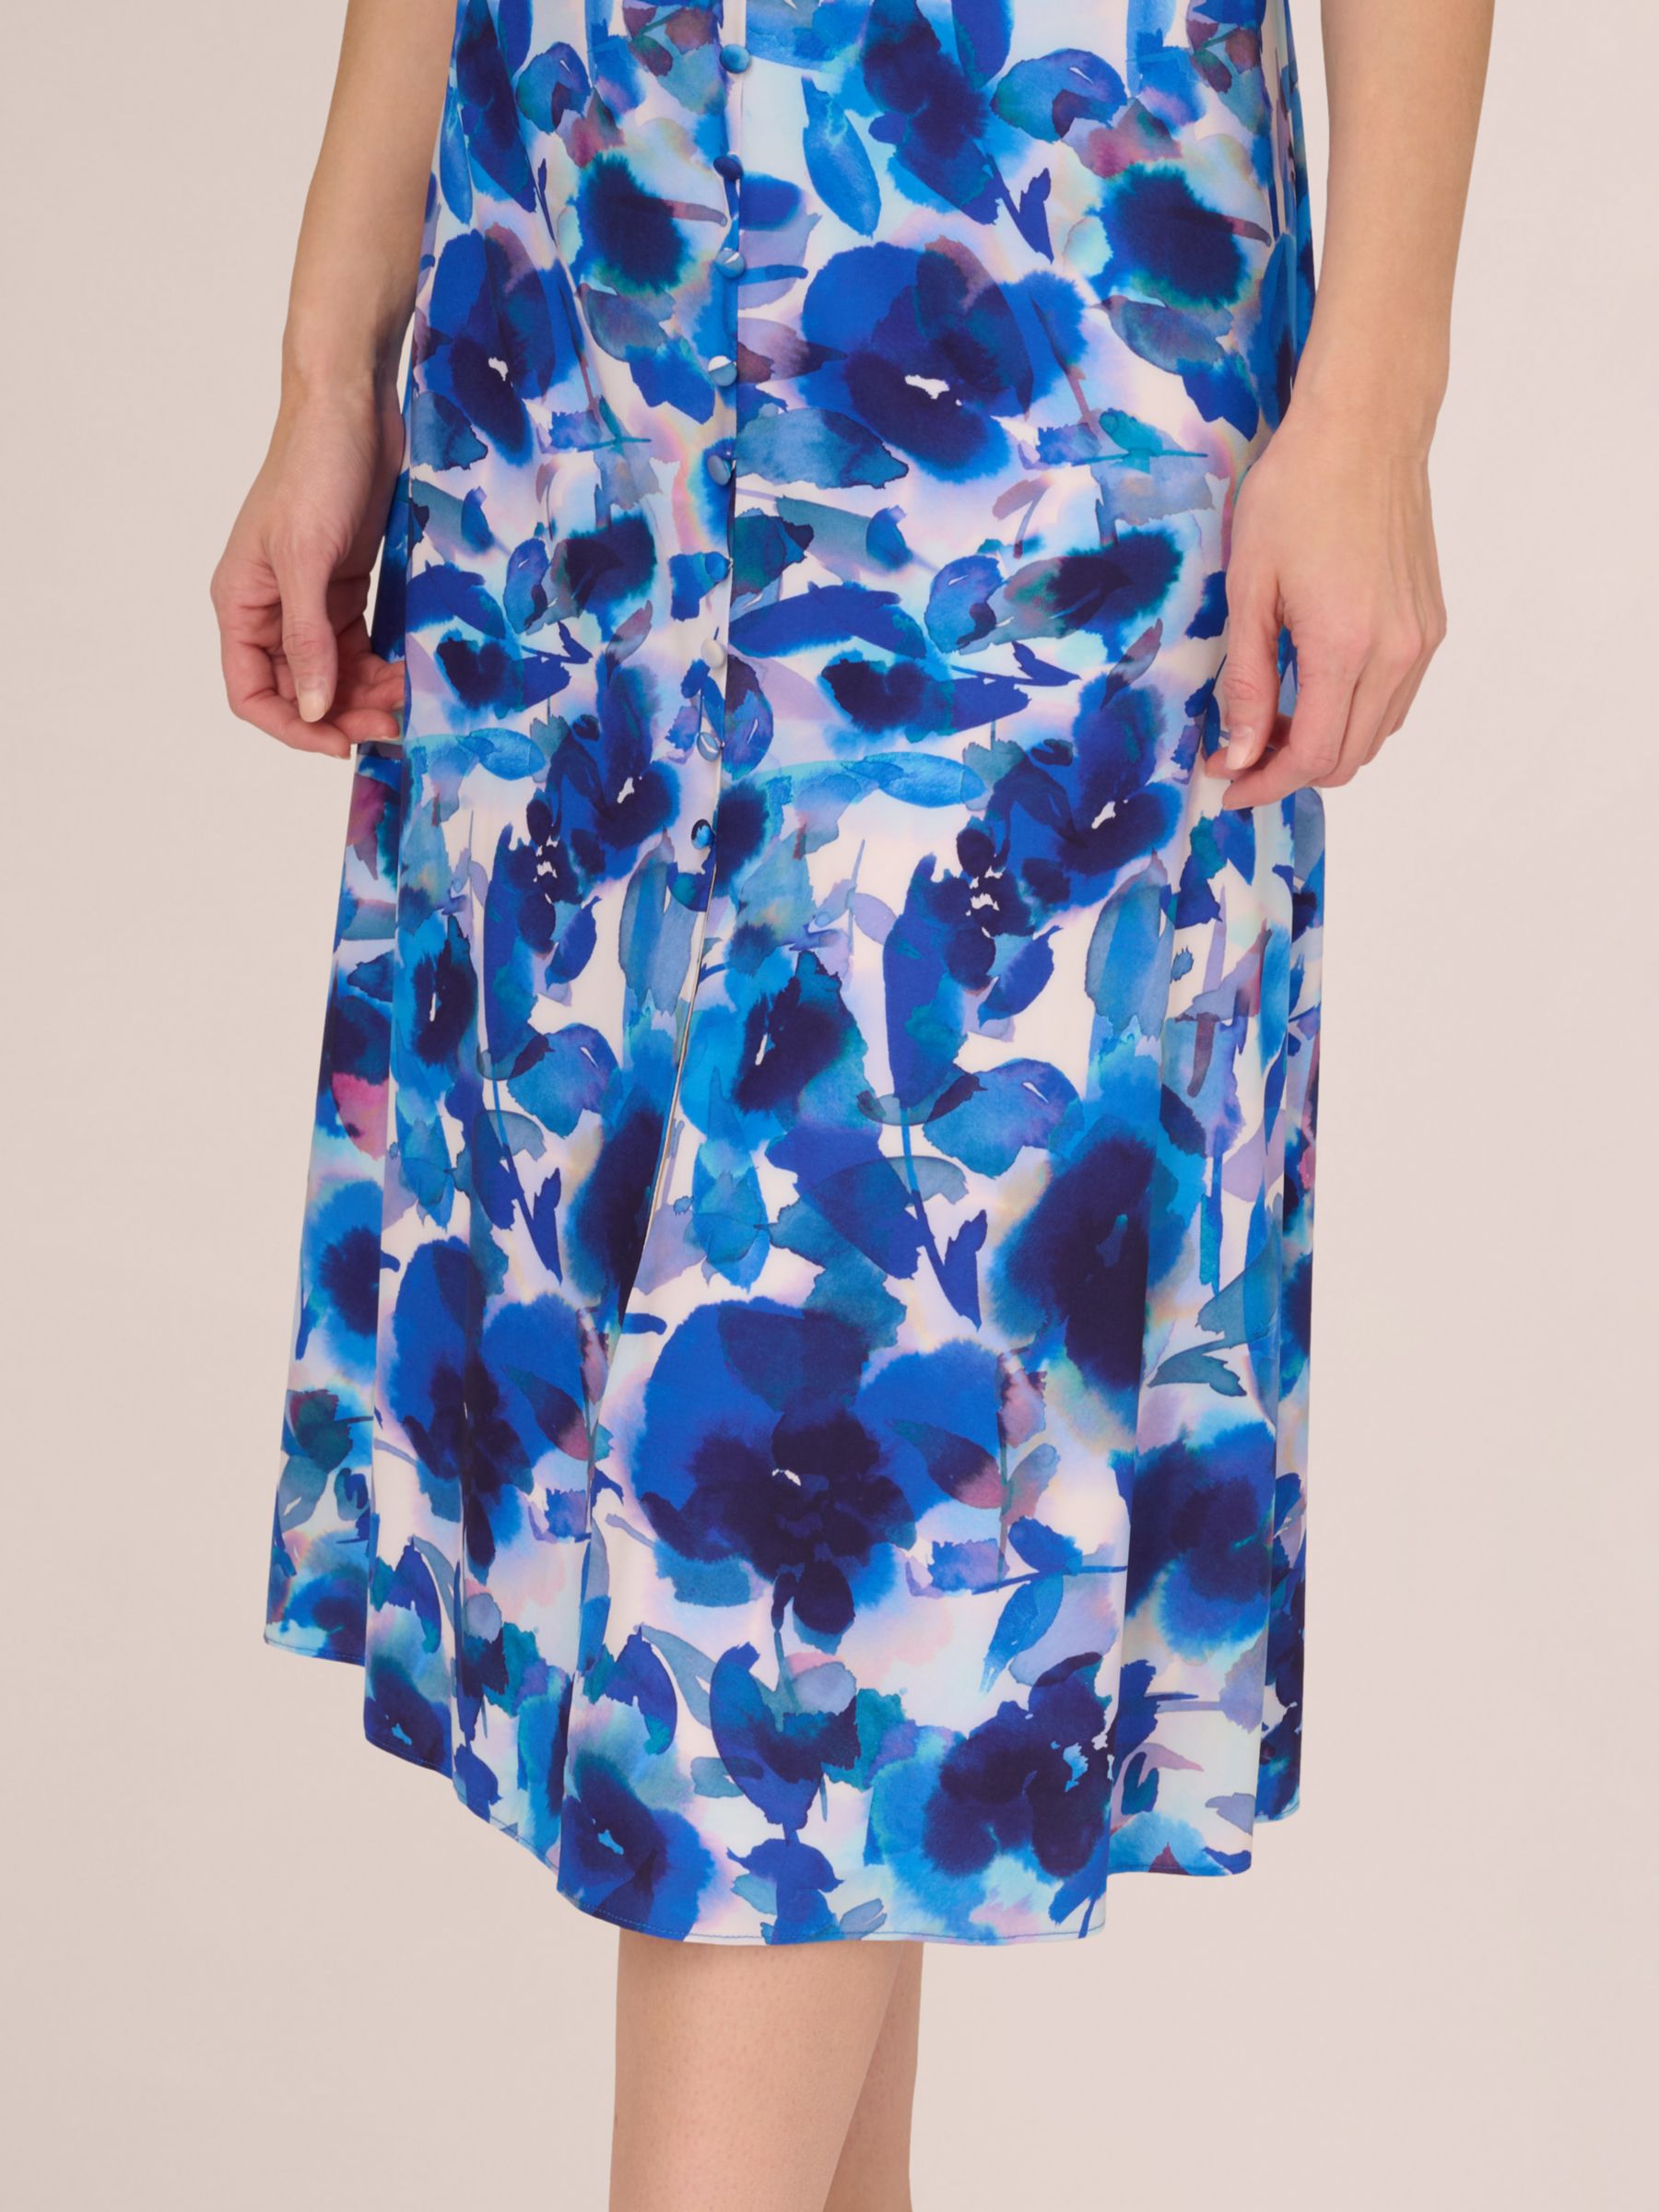 Adrianna Papell Floral Midi Chiffon Dress, Blue/Multi, 10